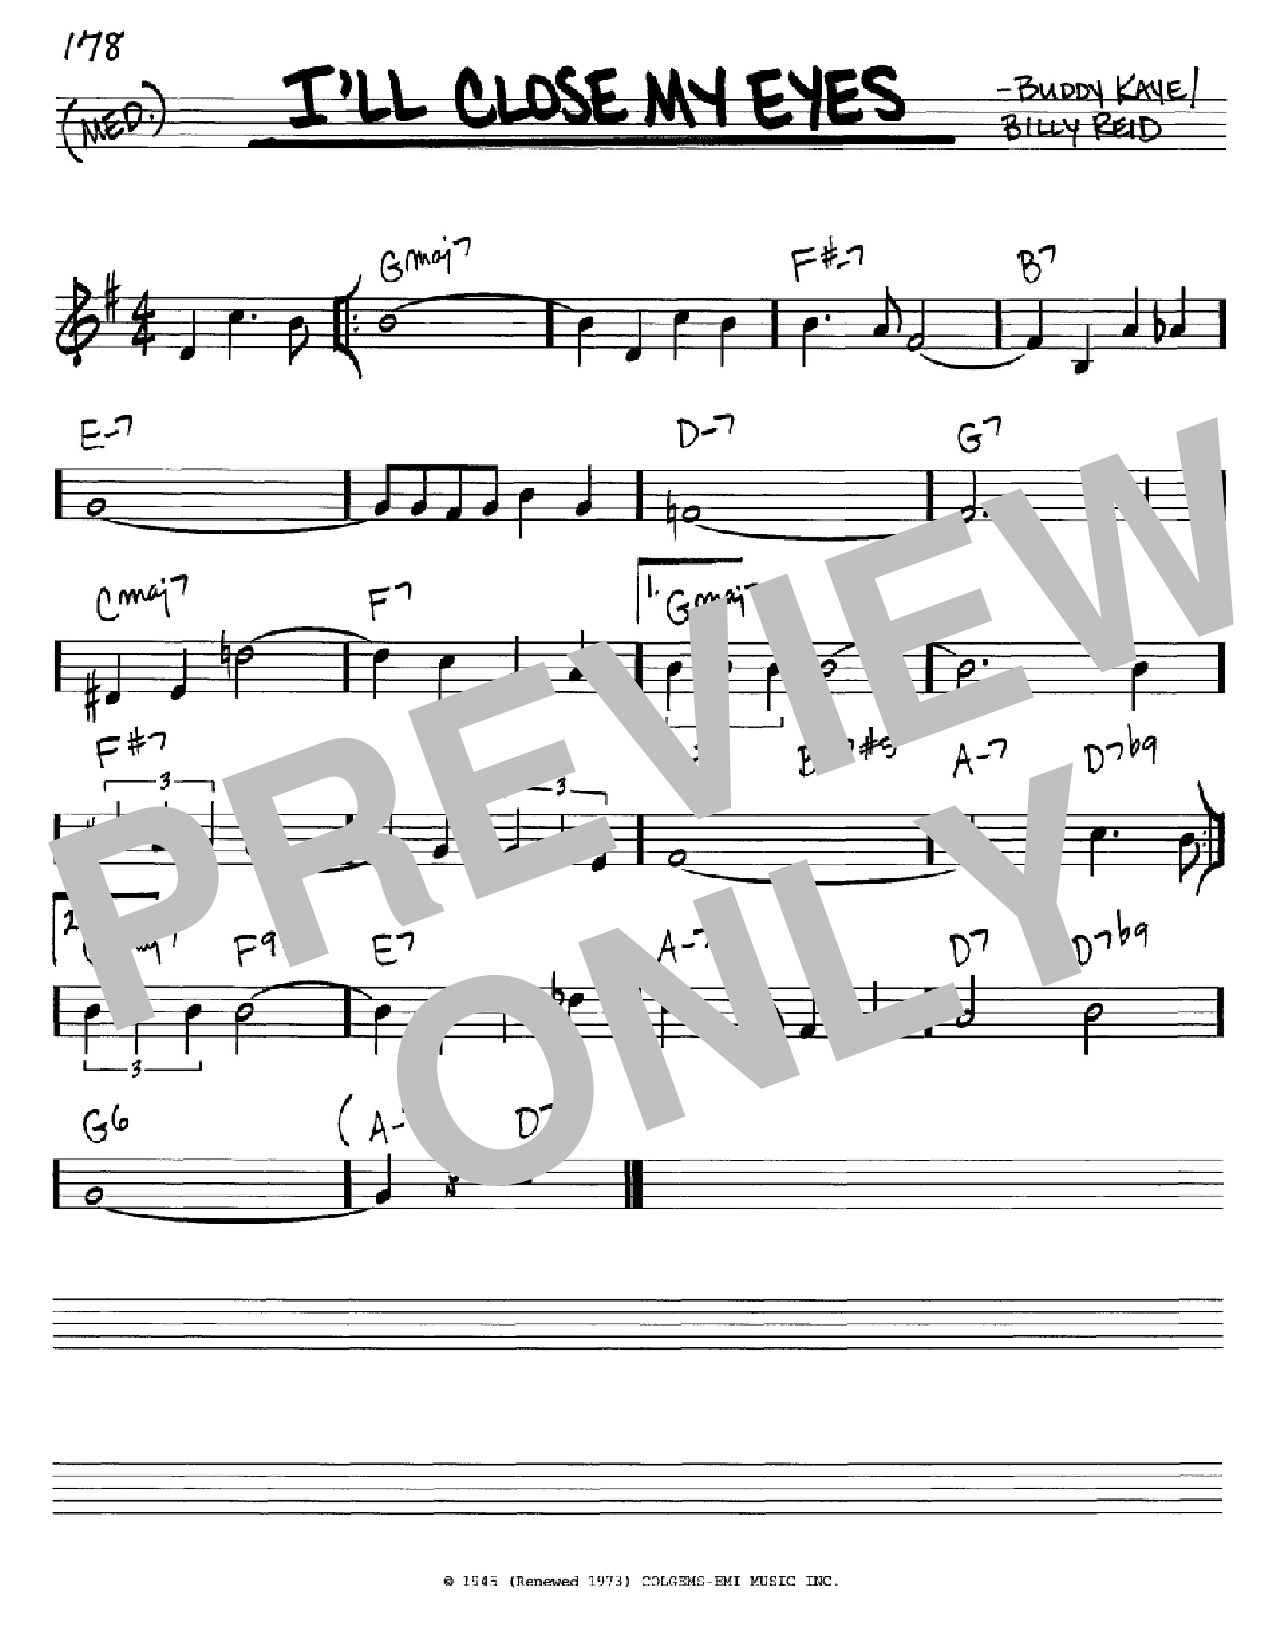 Buddy Kaye I'll Close My Eyes Sheet Music Notes & Chords for Real Book - Melody & Chords - C Instruments - Download or Print PDF